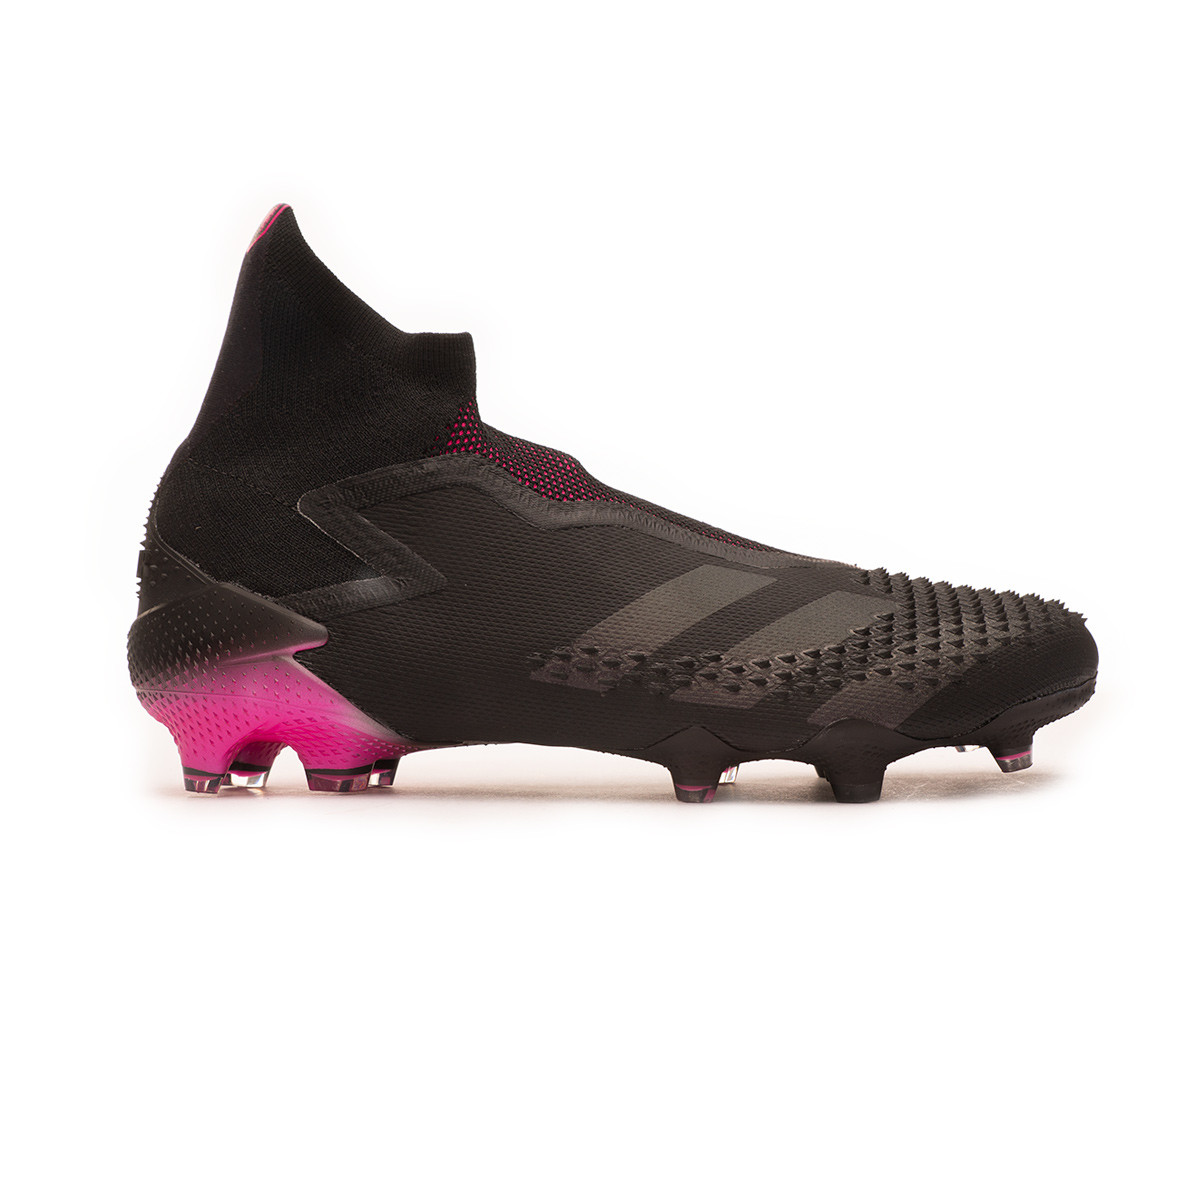 botas de futbol predator rosa